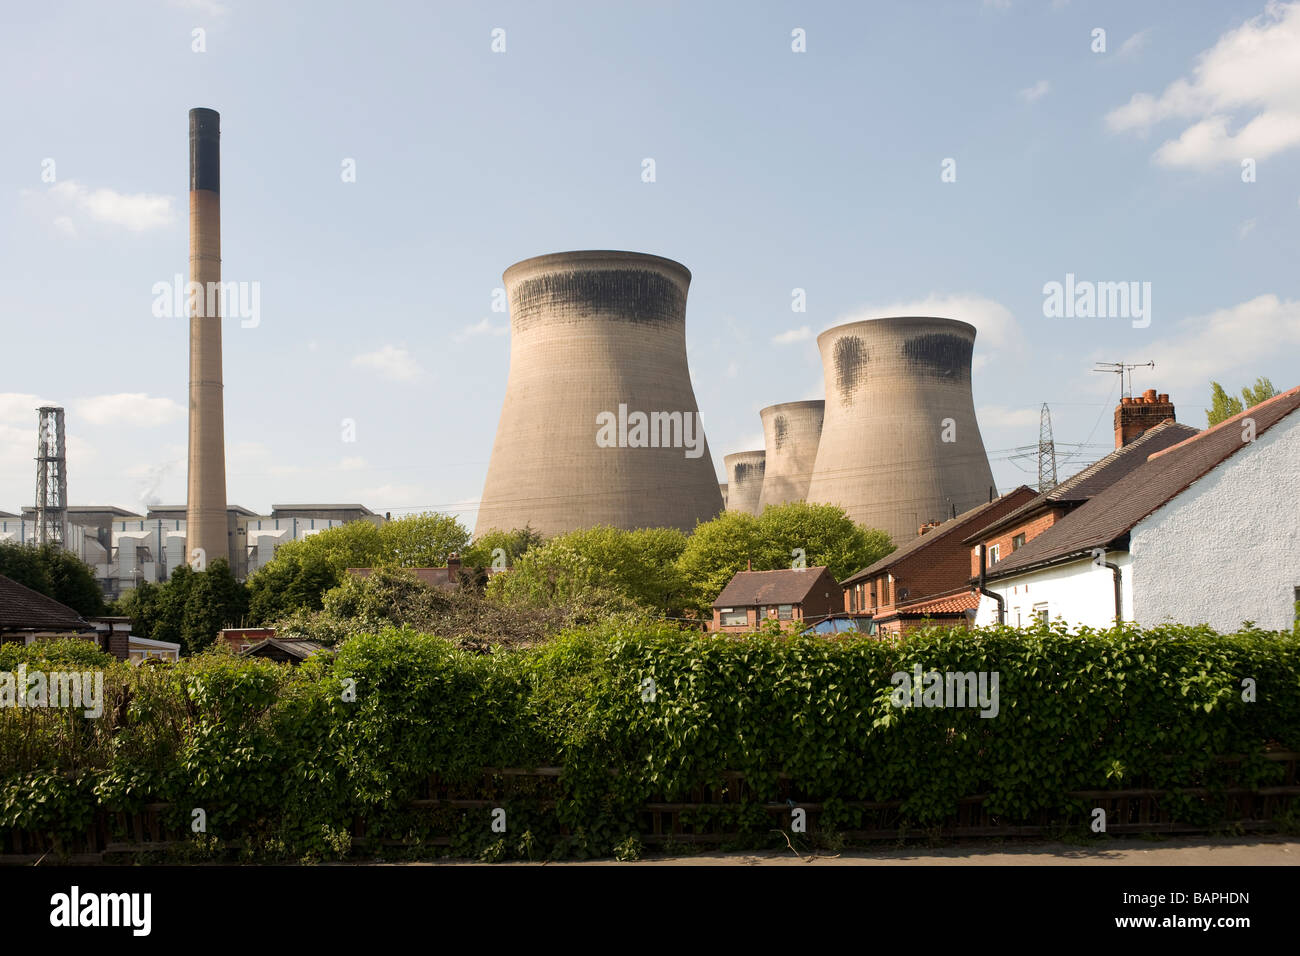 Ferrybridge Kohle und Biomasse betriebene Kraftwerk in West Yorkshire, nahe dem Dorf Ferrybridge Stockfoto